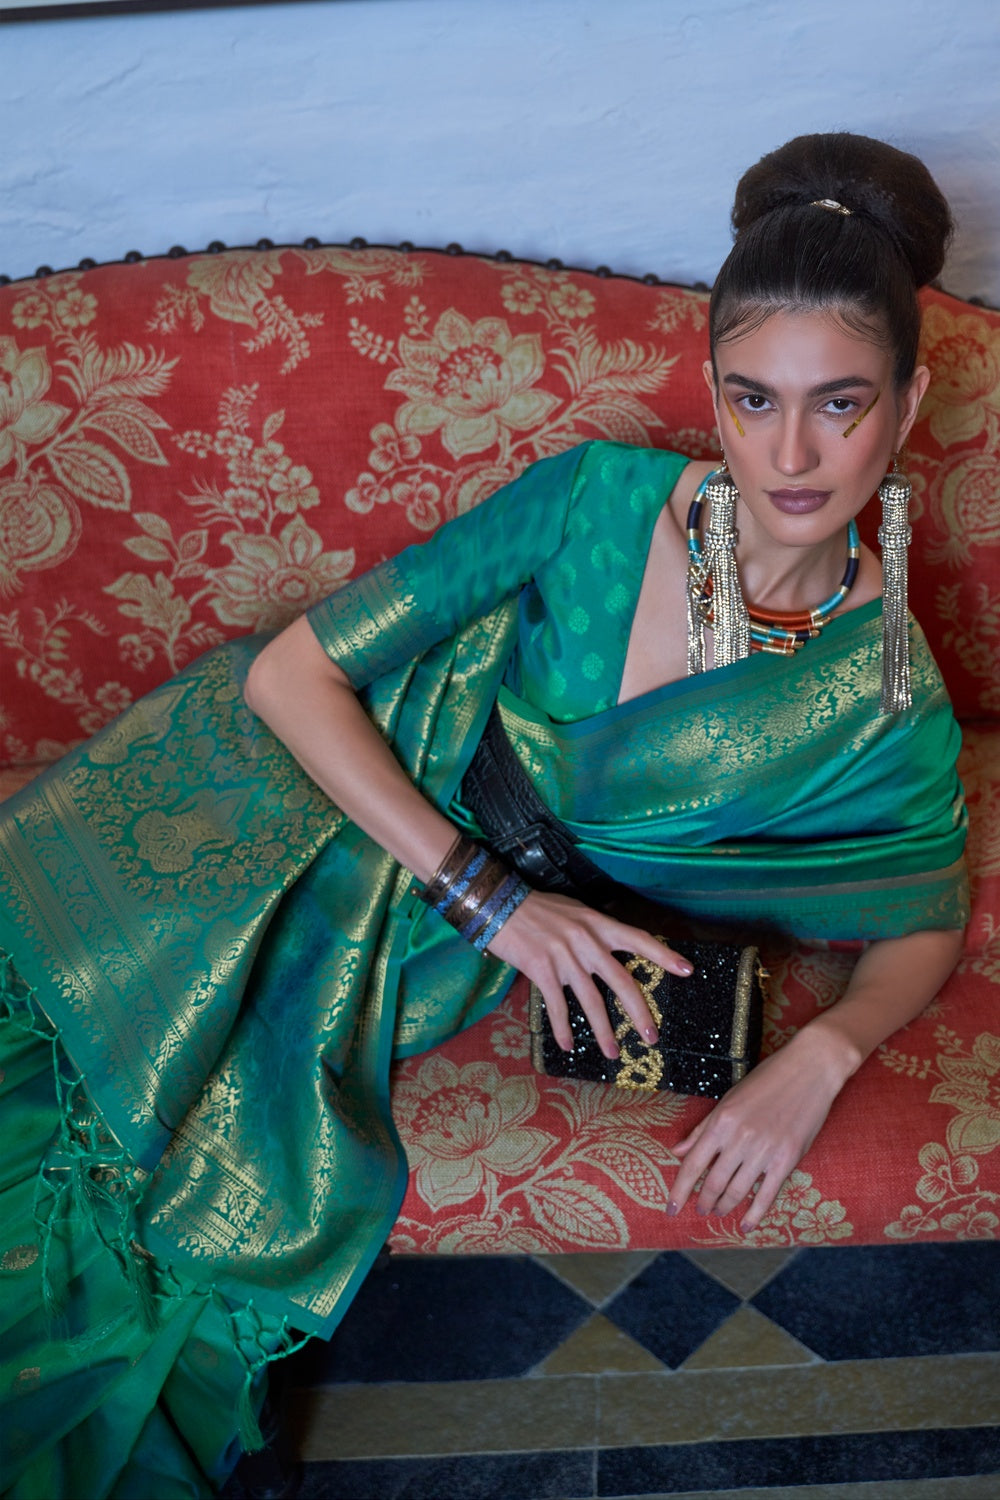 Pine Green Soft Banarasi Silk Saree With Weaving Work